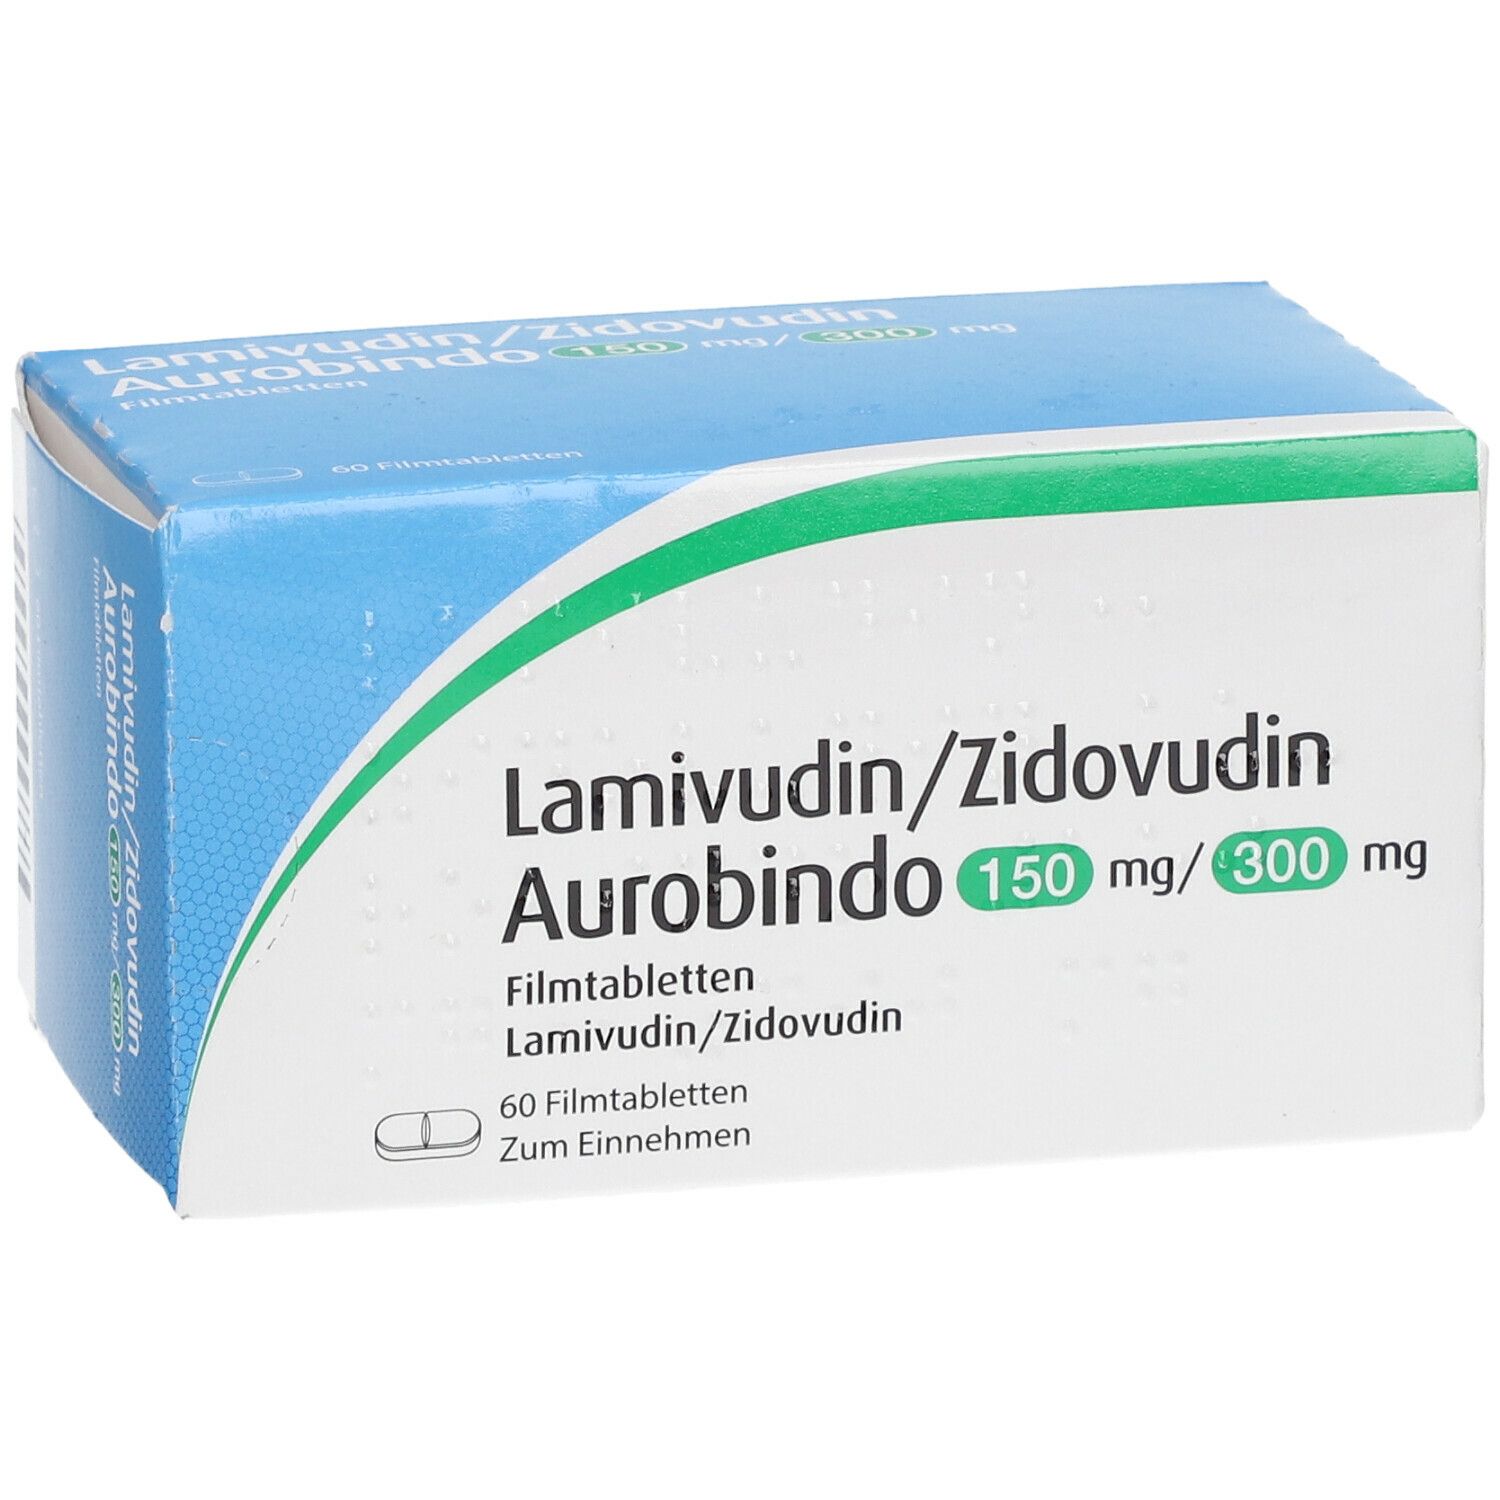 Lamivudin/Zidovudin Aurobindo 150 mg/300 mg